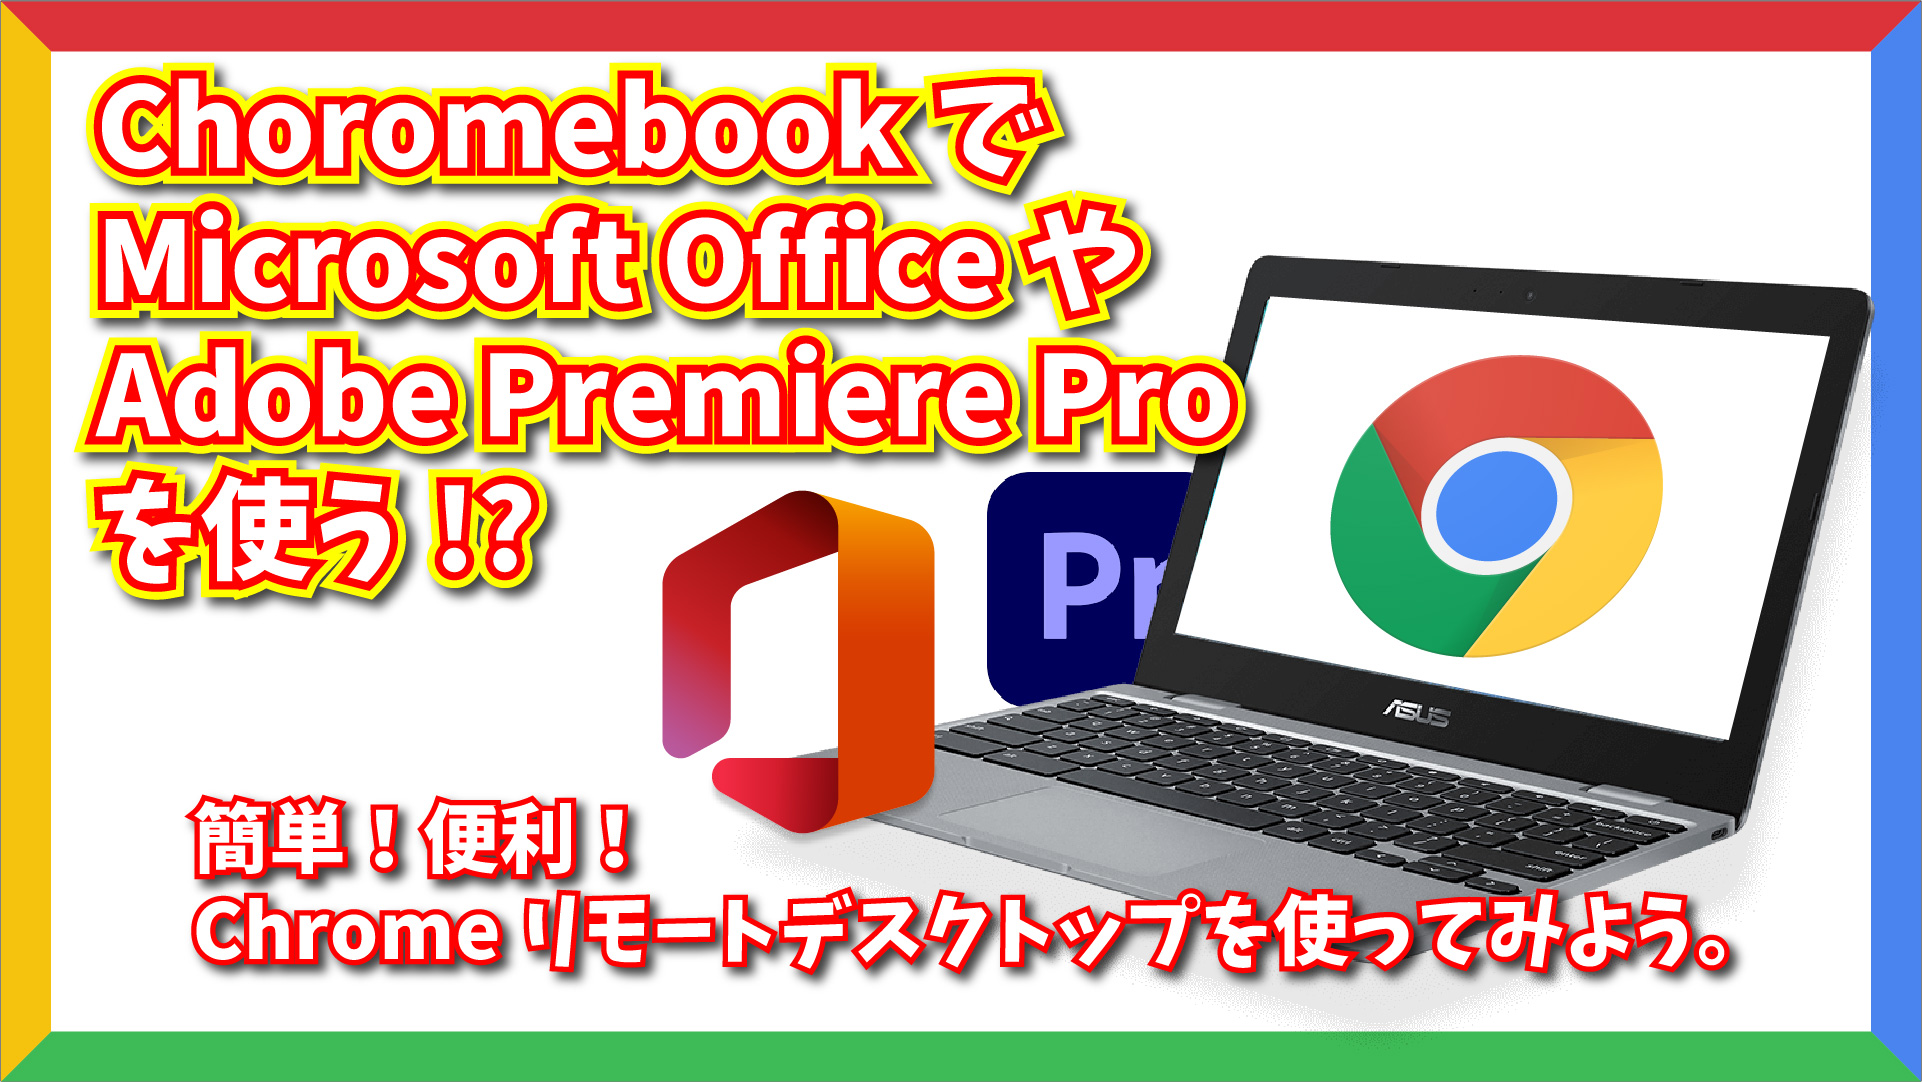 Chromebook で Microsoft Office や Adobe Premier Pro を使ってみた。